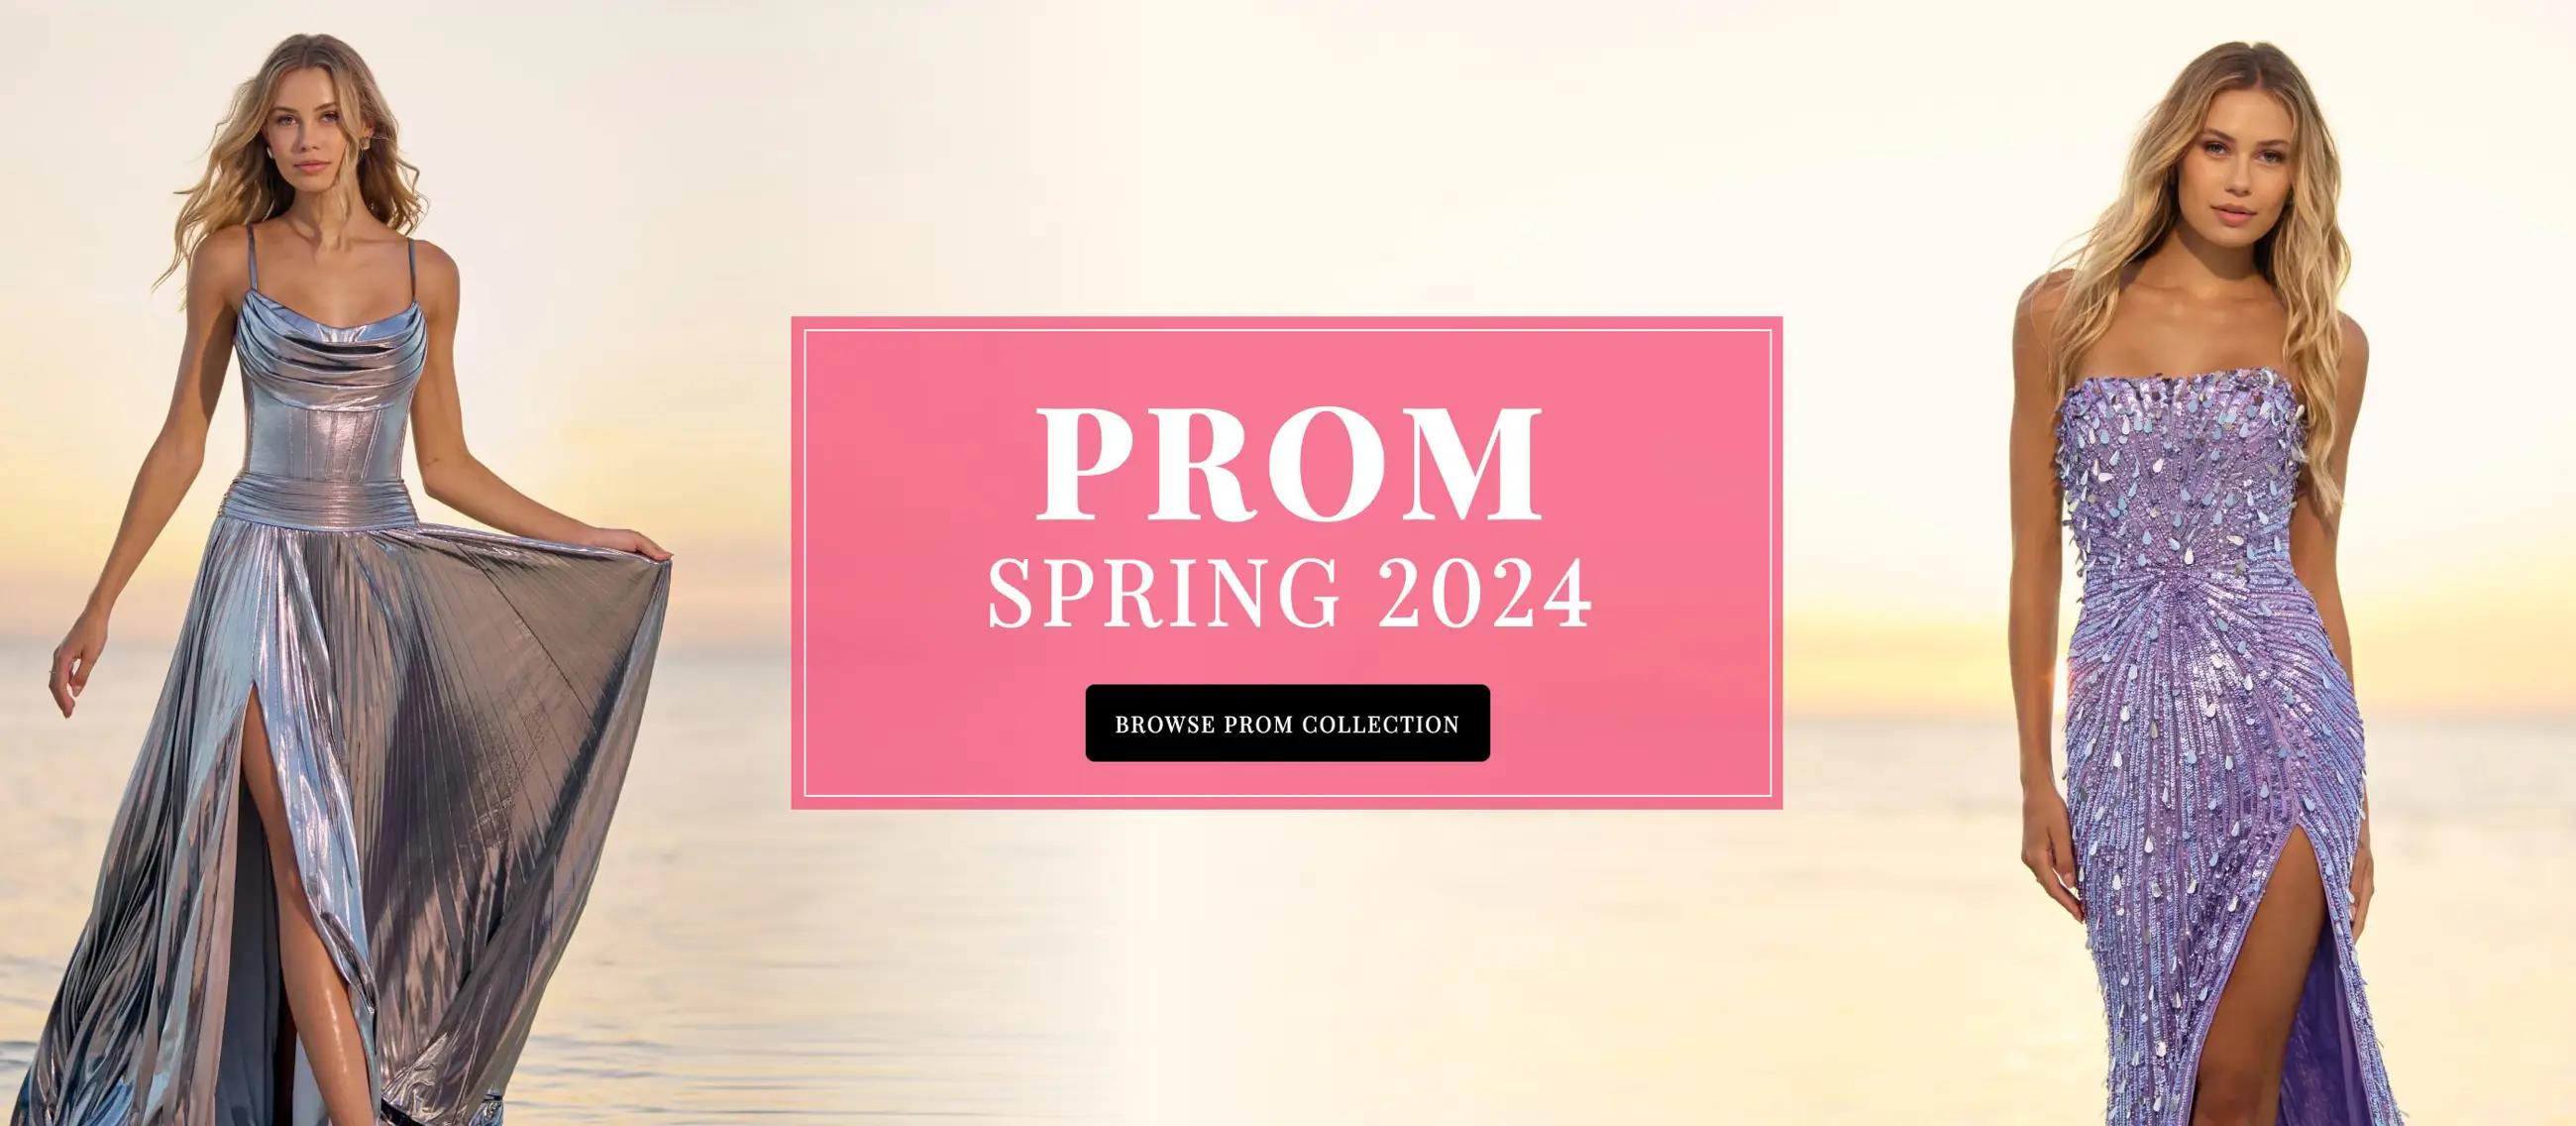 Prom Spring 2024 banner